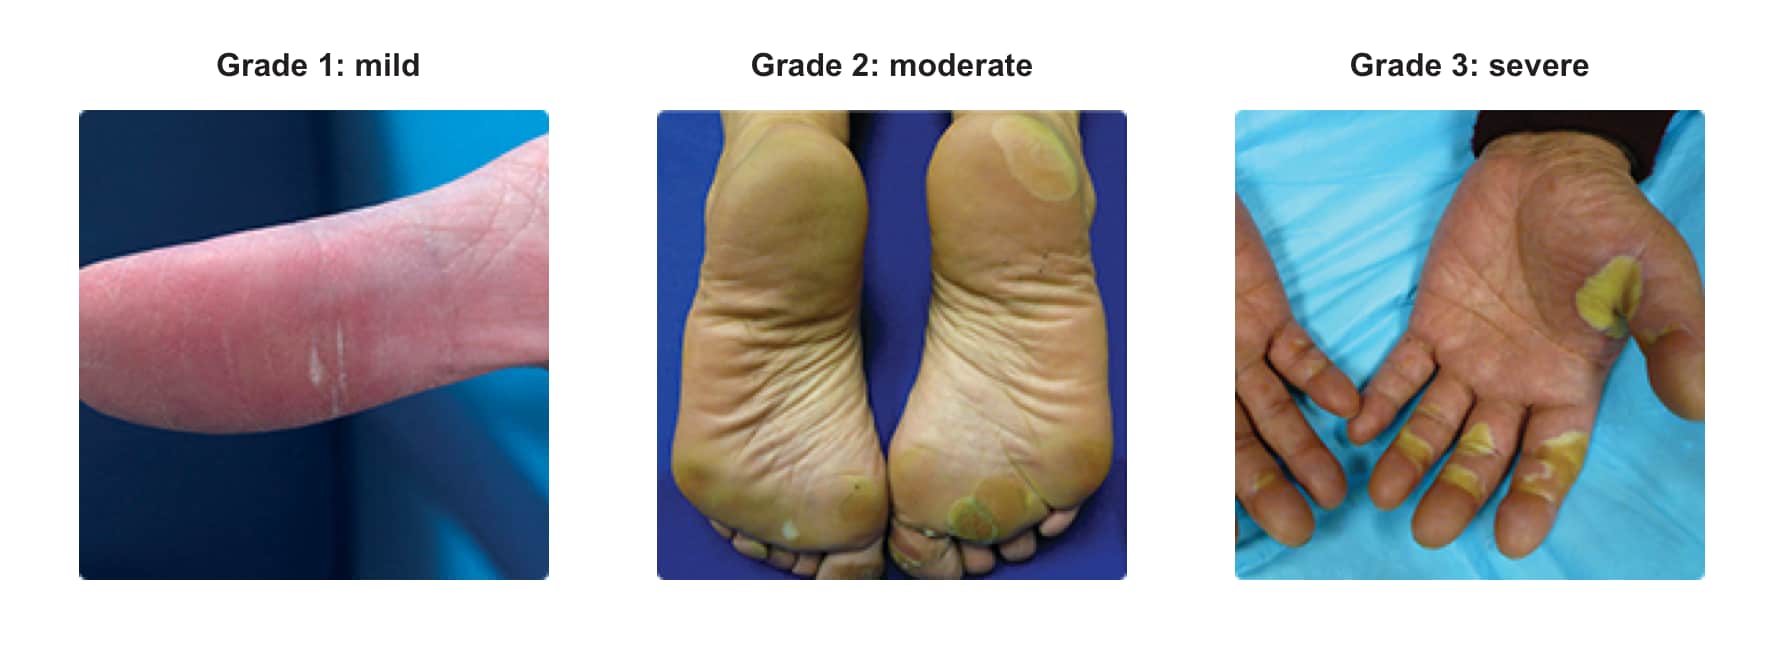 Examples of mild (grade 1), moderate (grade 2), and severe (grade 3) levels of HSFR in STIVARGA (regorafenib) patients.